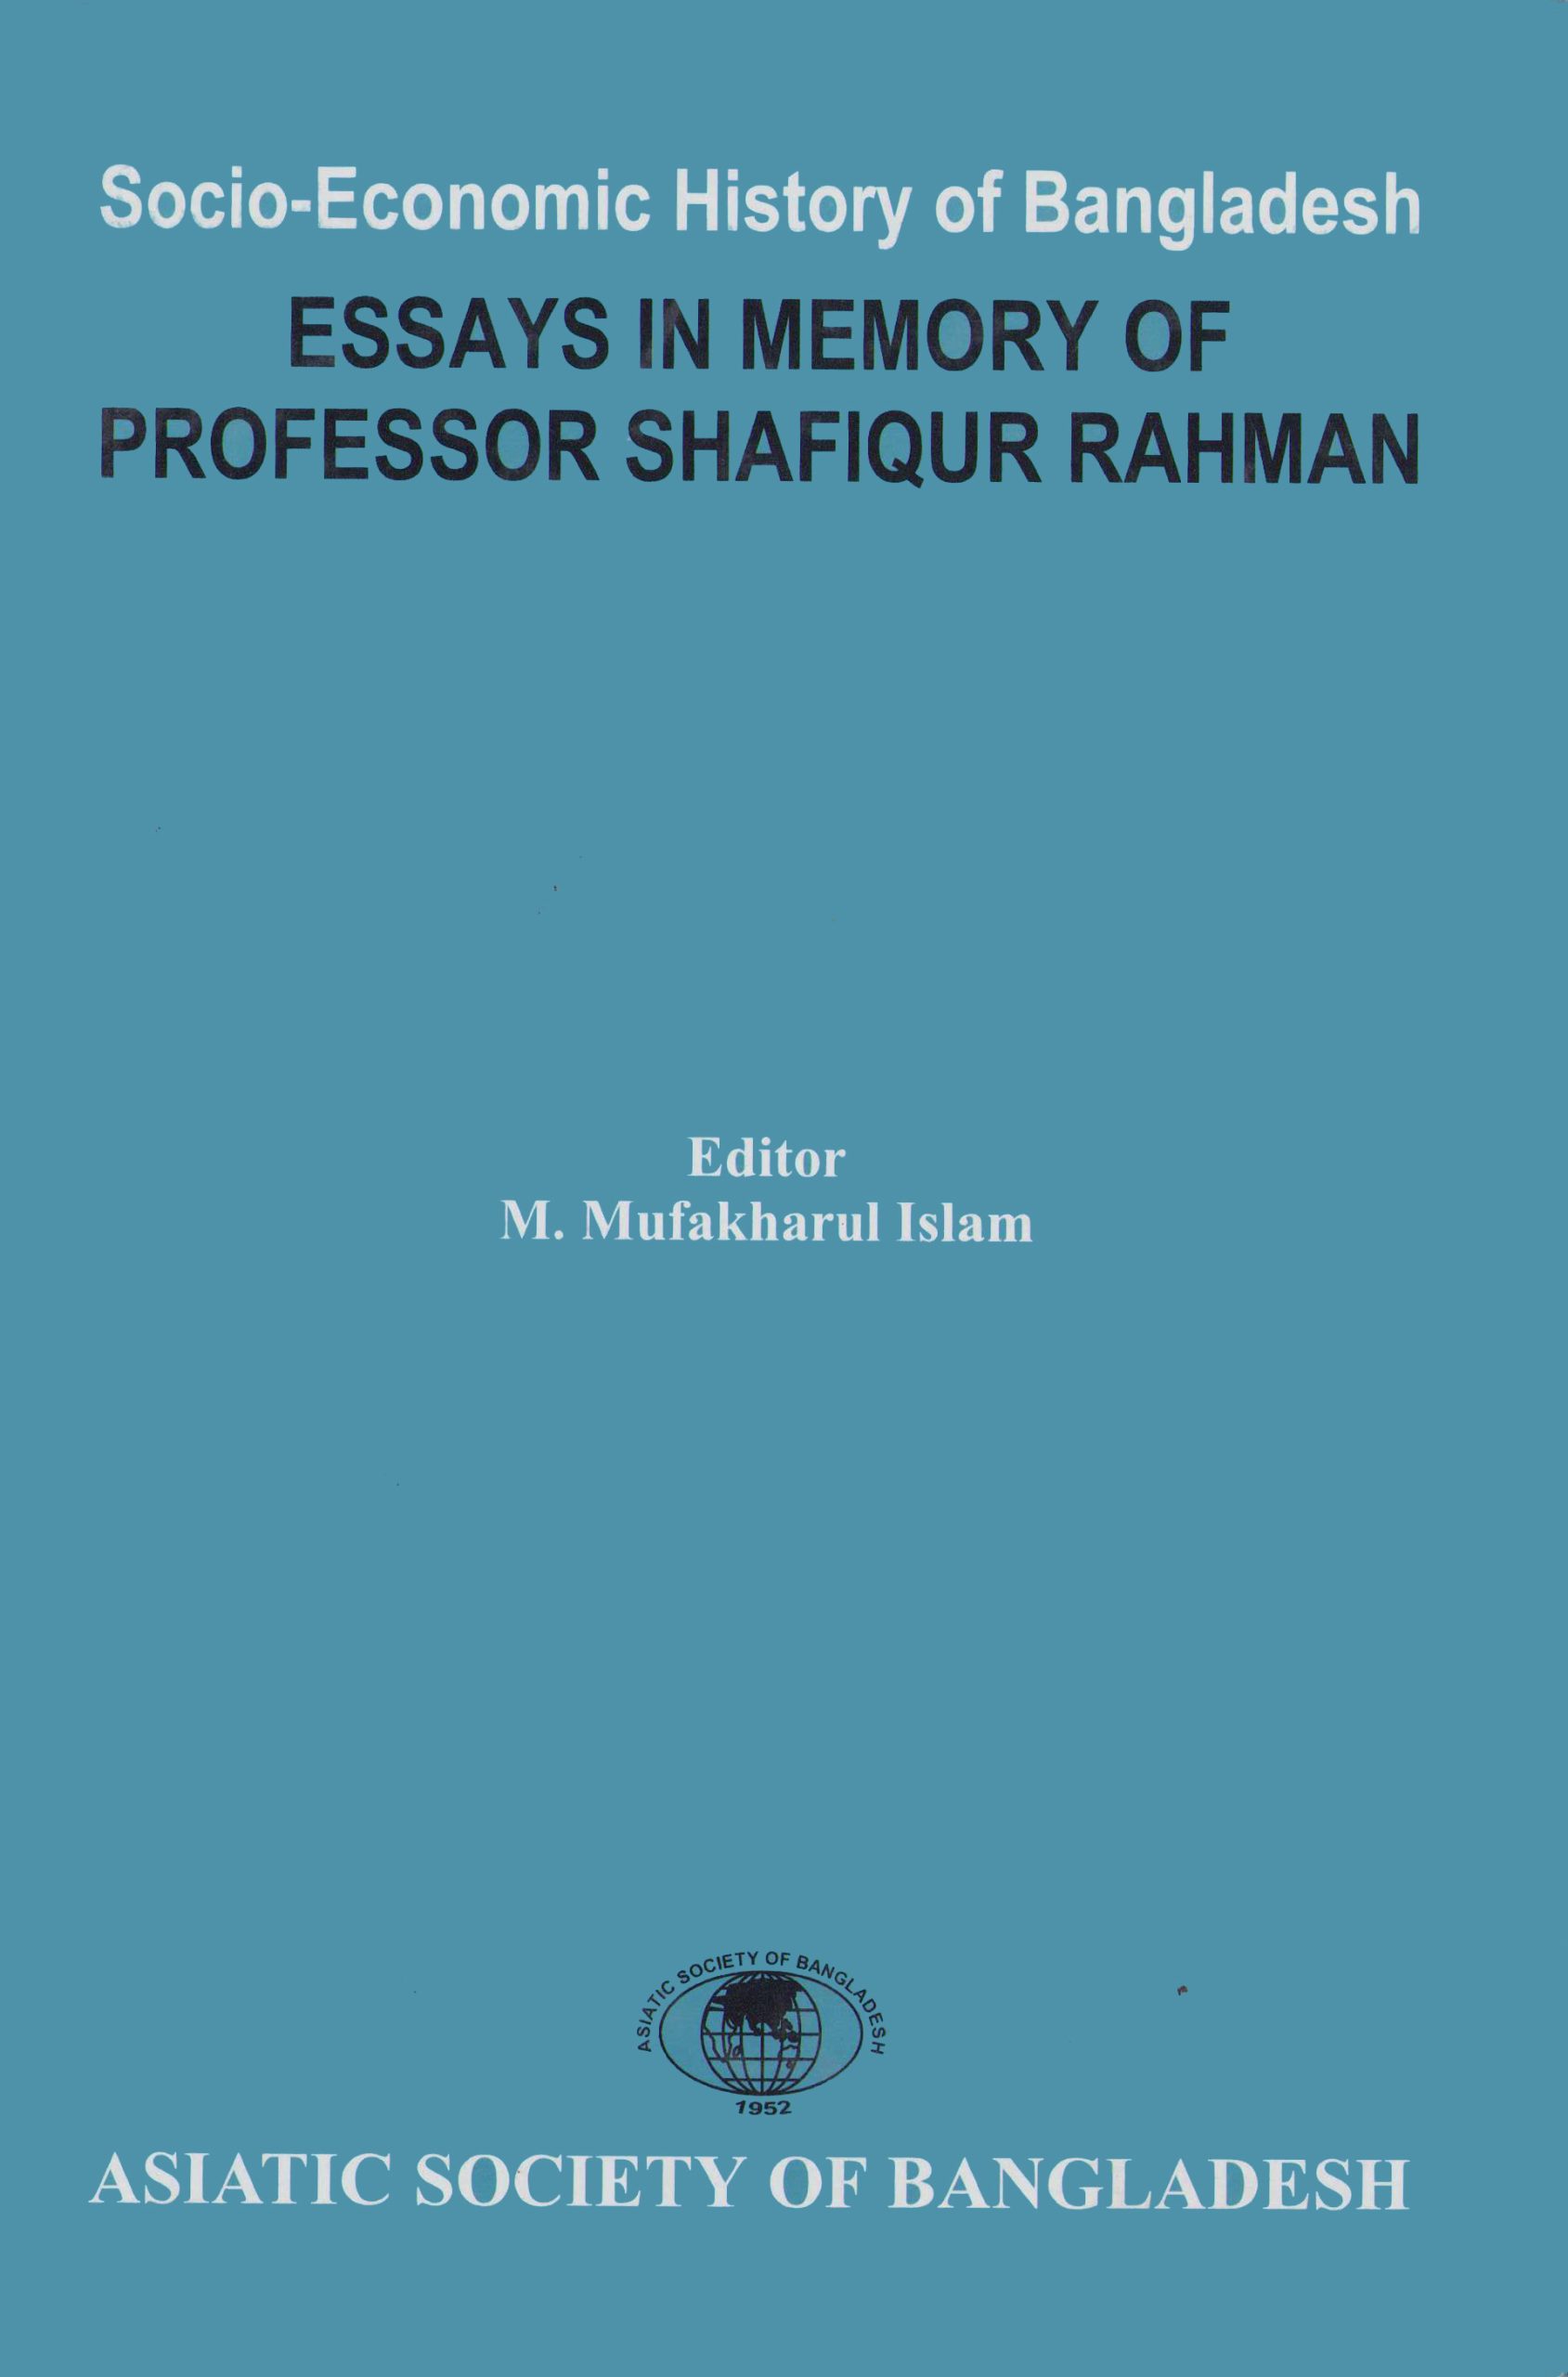 ASBP_089_Socio-Economic History of Bangladesh by Mufakhraul Islam (Editor) (2004)